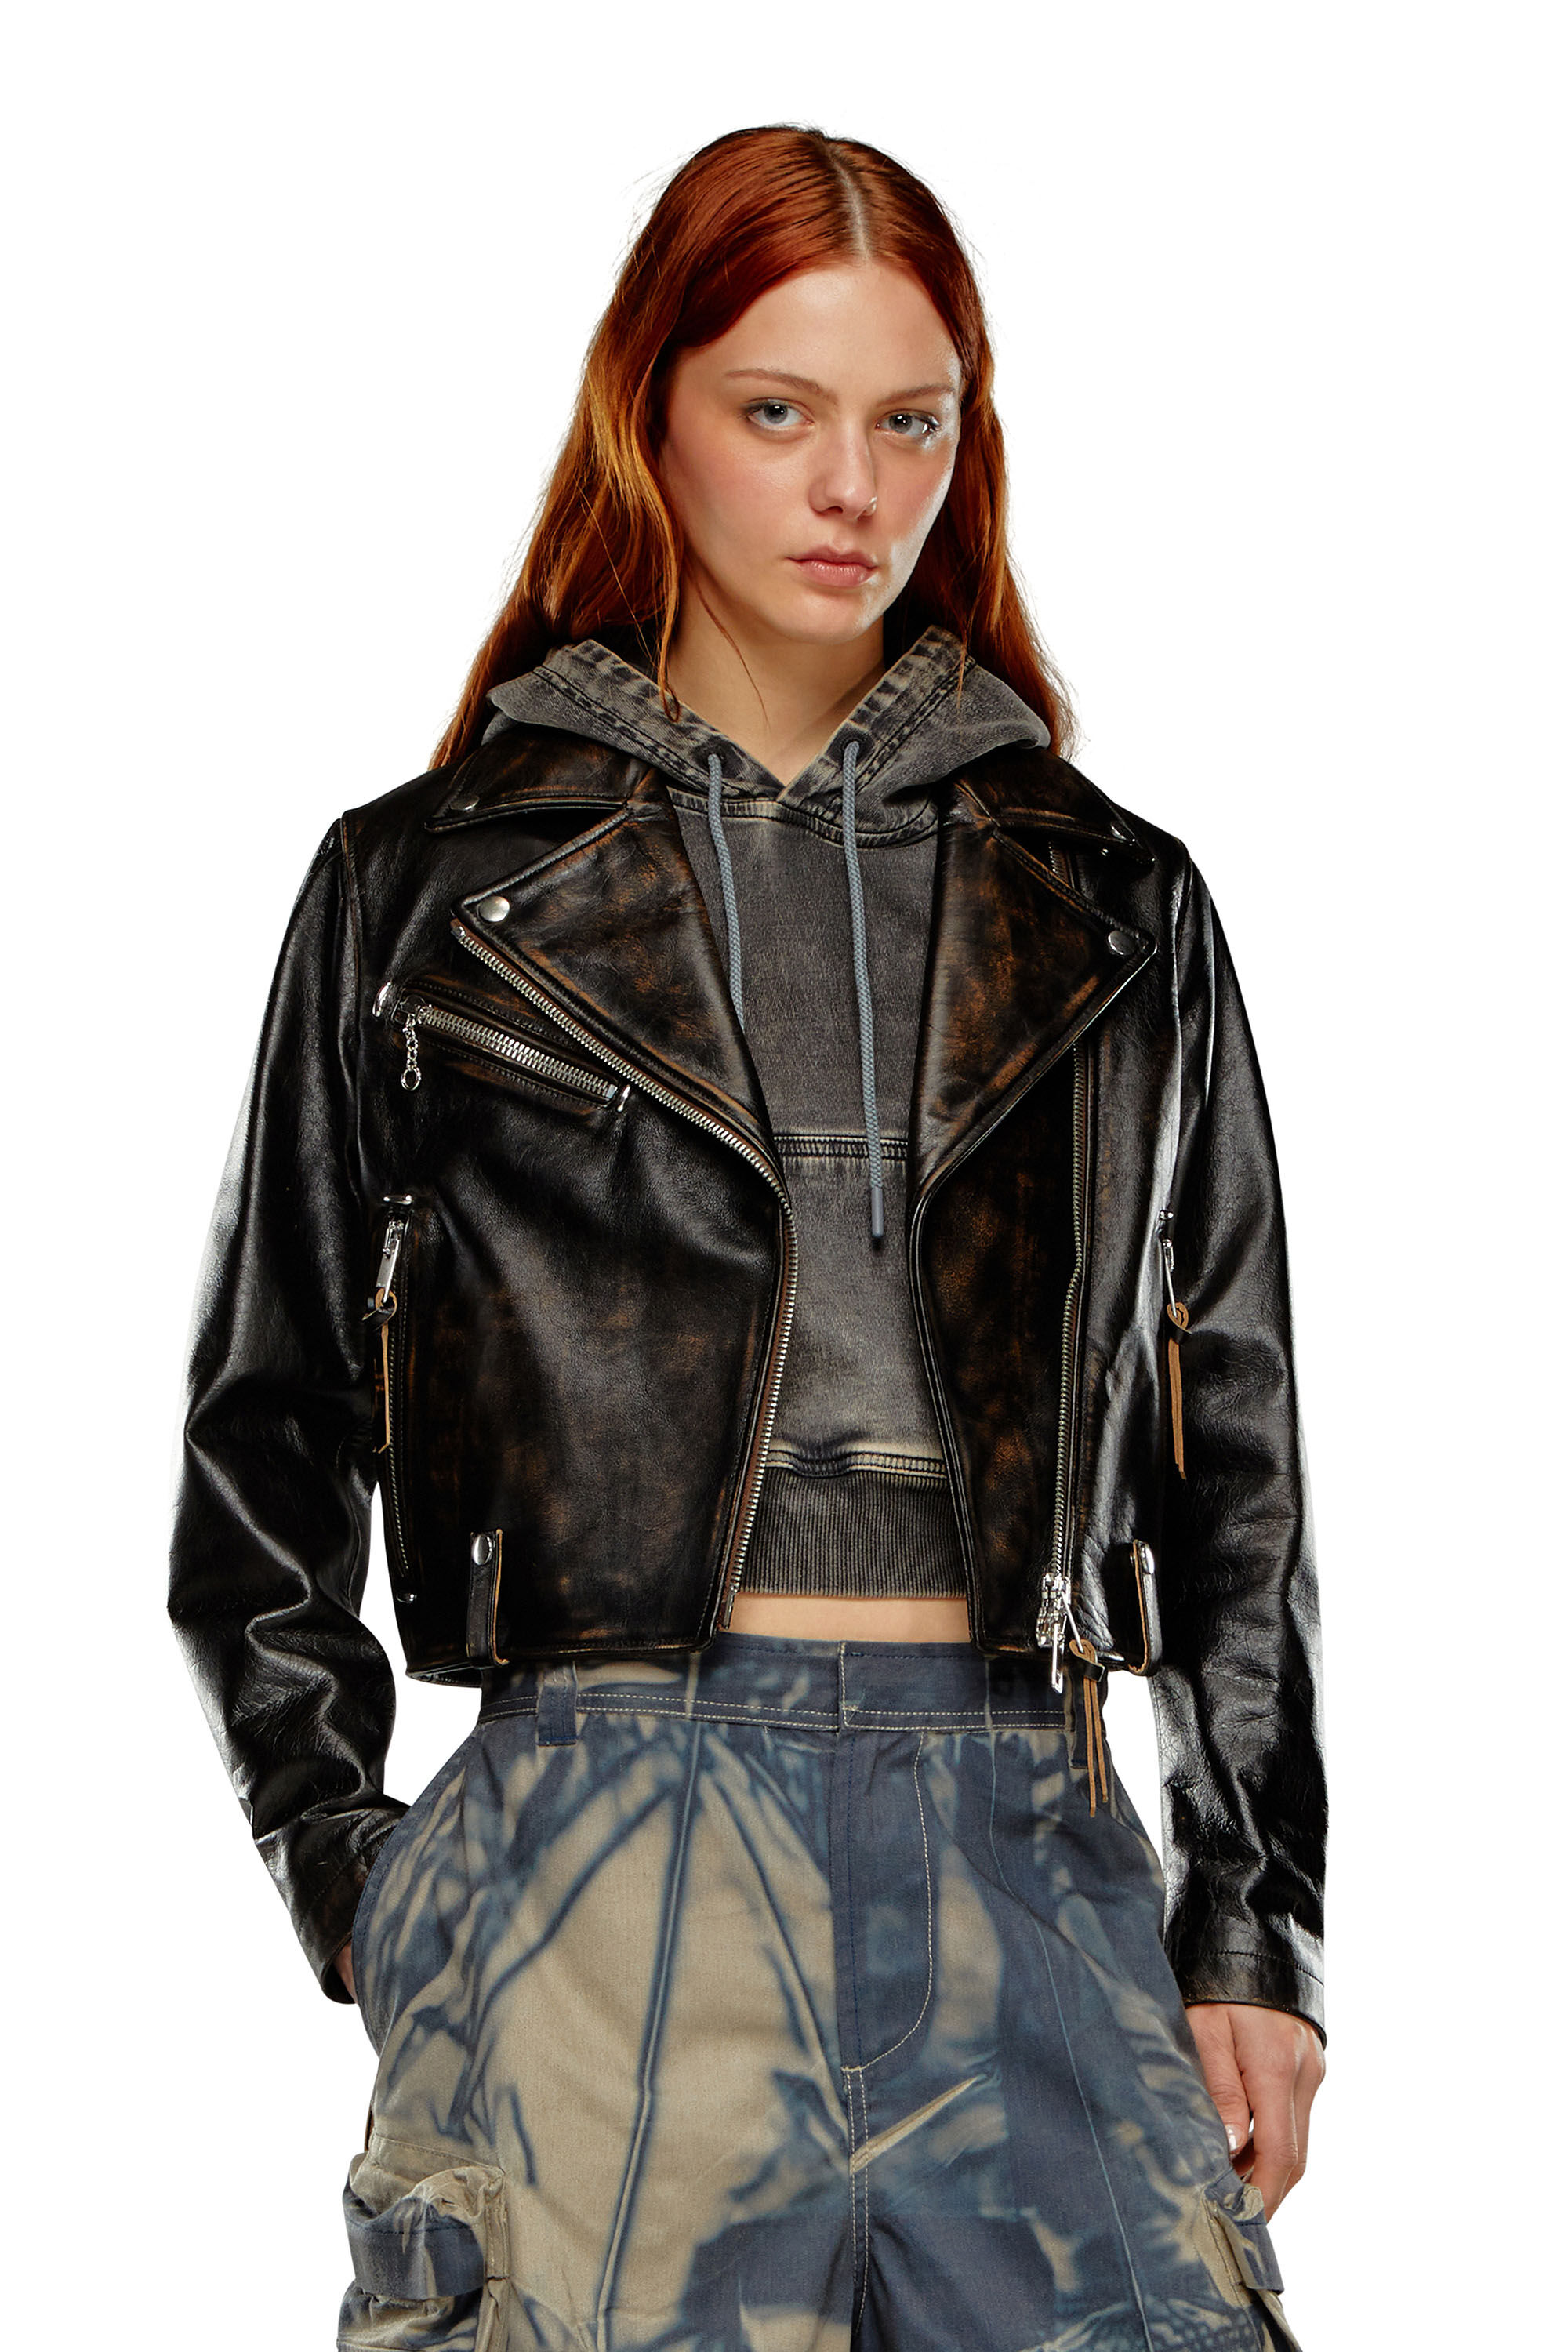 Diesel - L-EDMEA-CL, Woman Biker jacket in treated leather in Black - Image 3